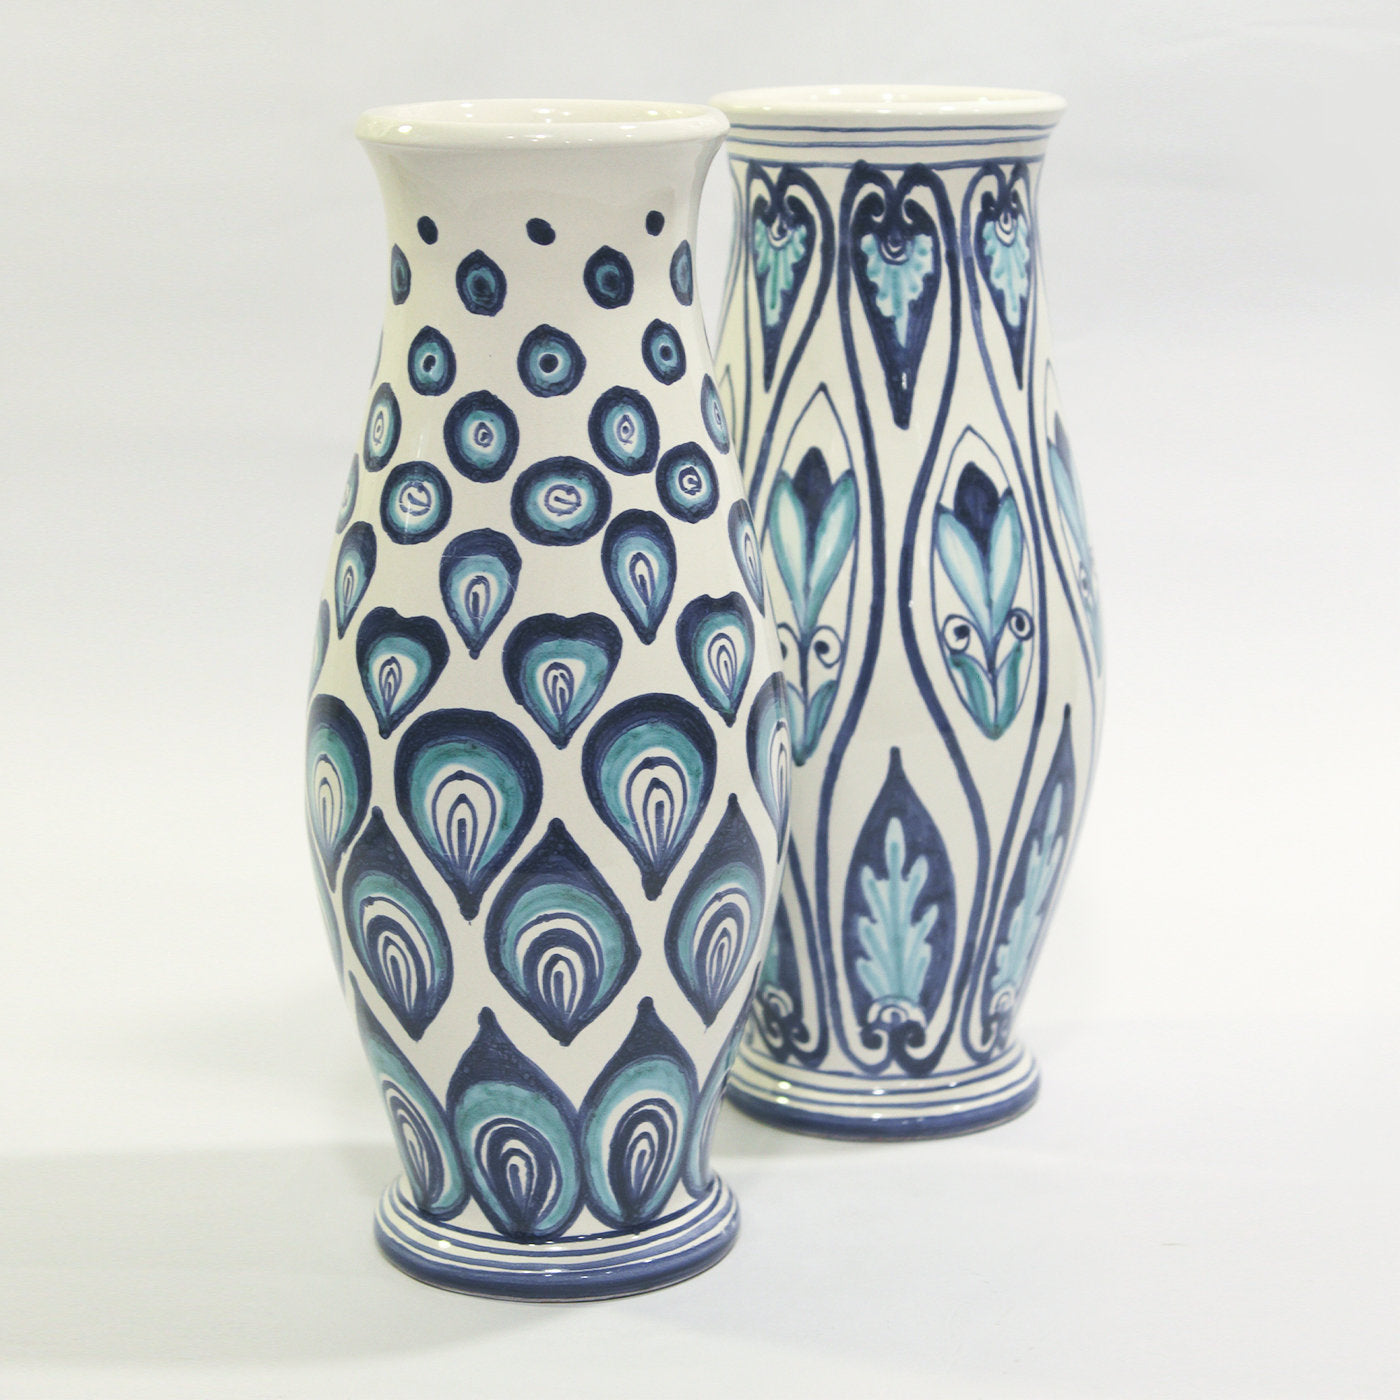 Chini a Cuore Vase by Lorenza Adami - Alternative view 1